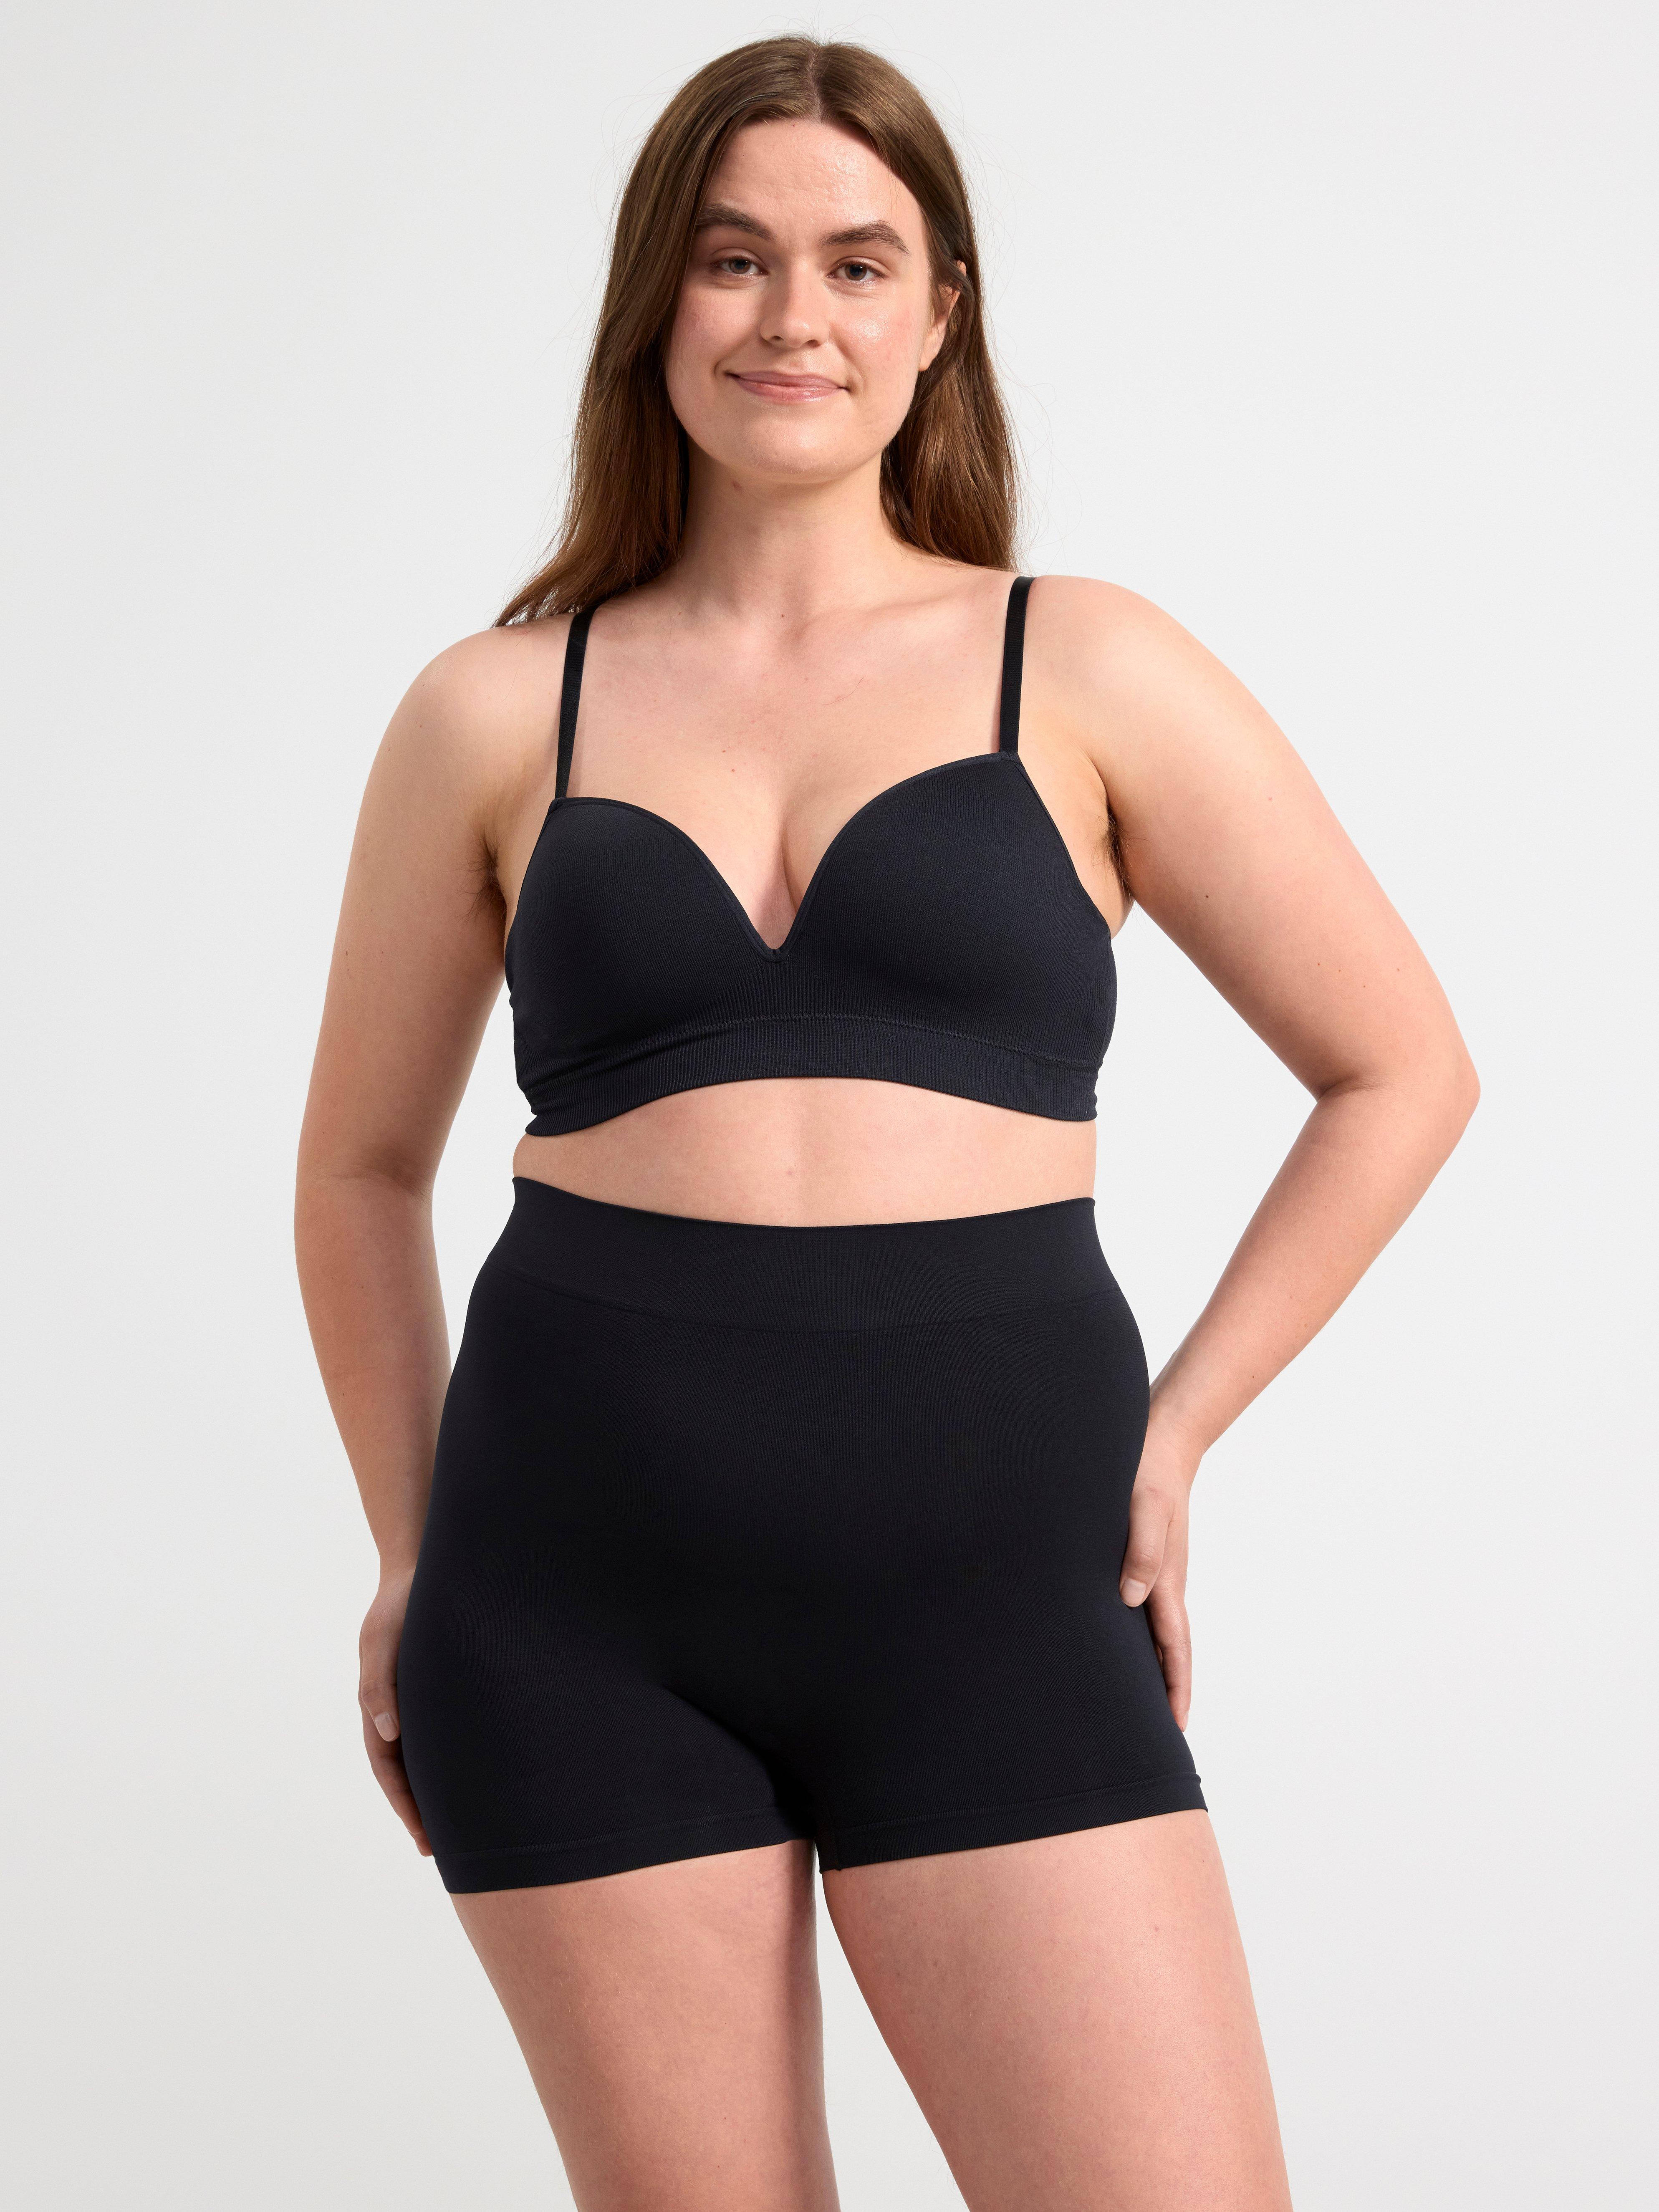 lyka_classic_underwears - Ladies push-up bra 💋💋 Available Size